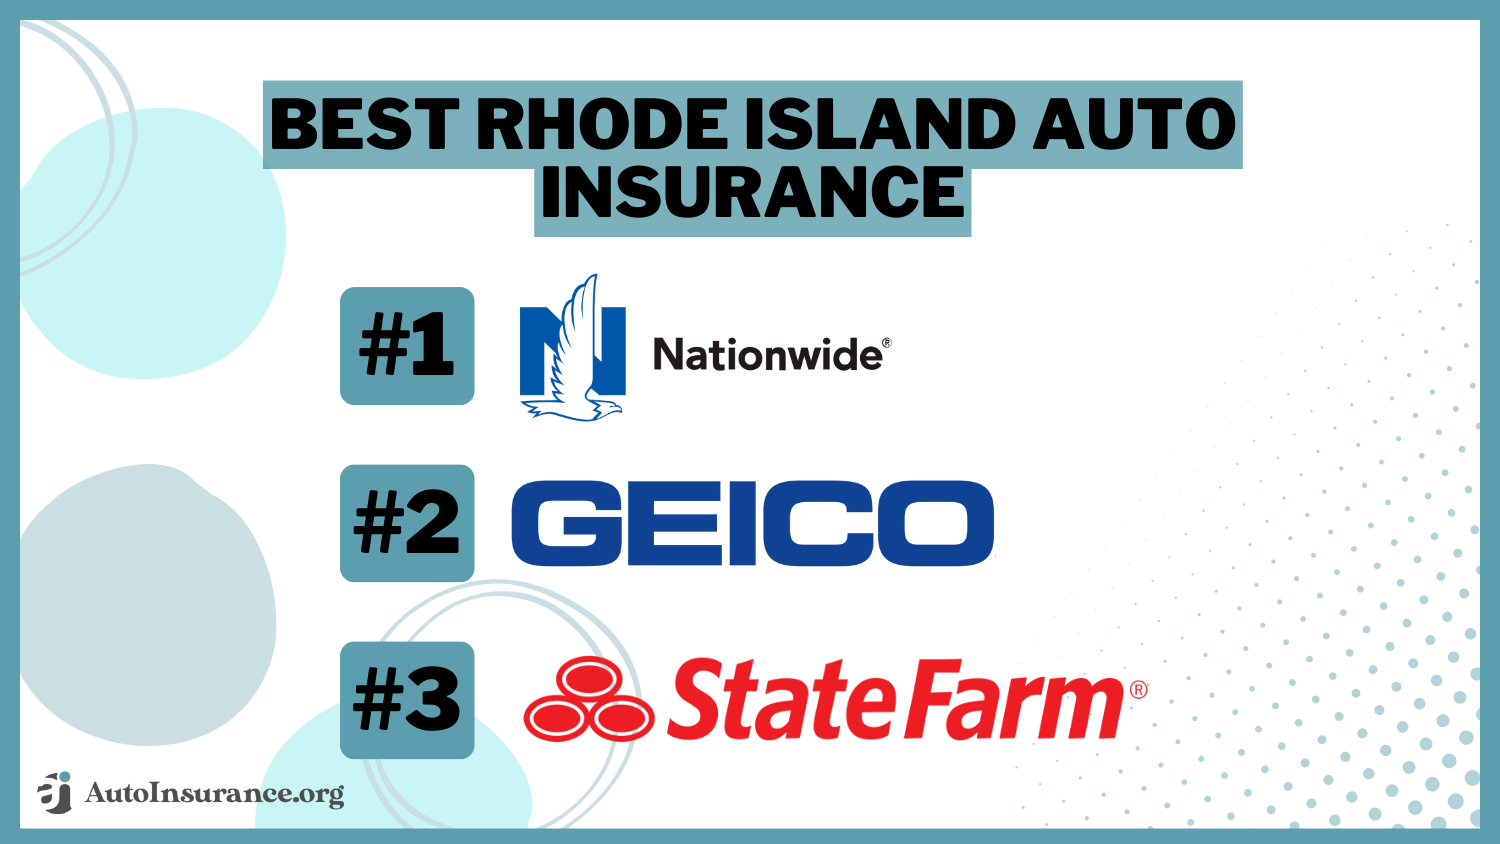 Nationwide, Geico, State Farm: Best Rhode Island Auto Insurance